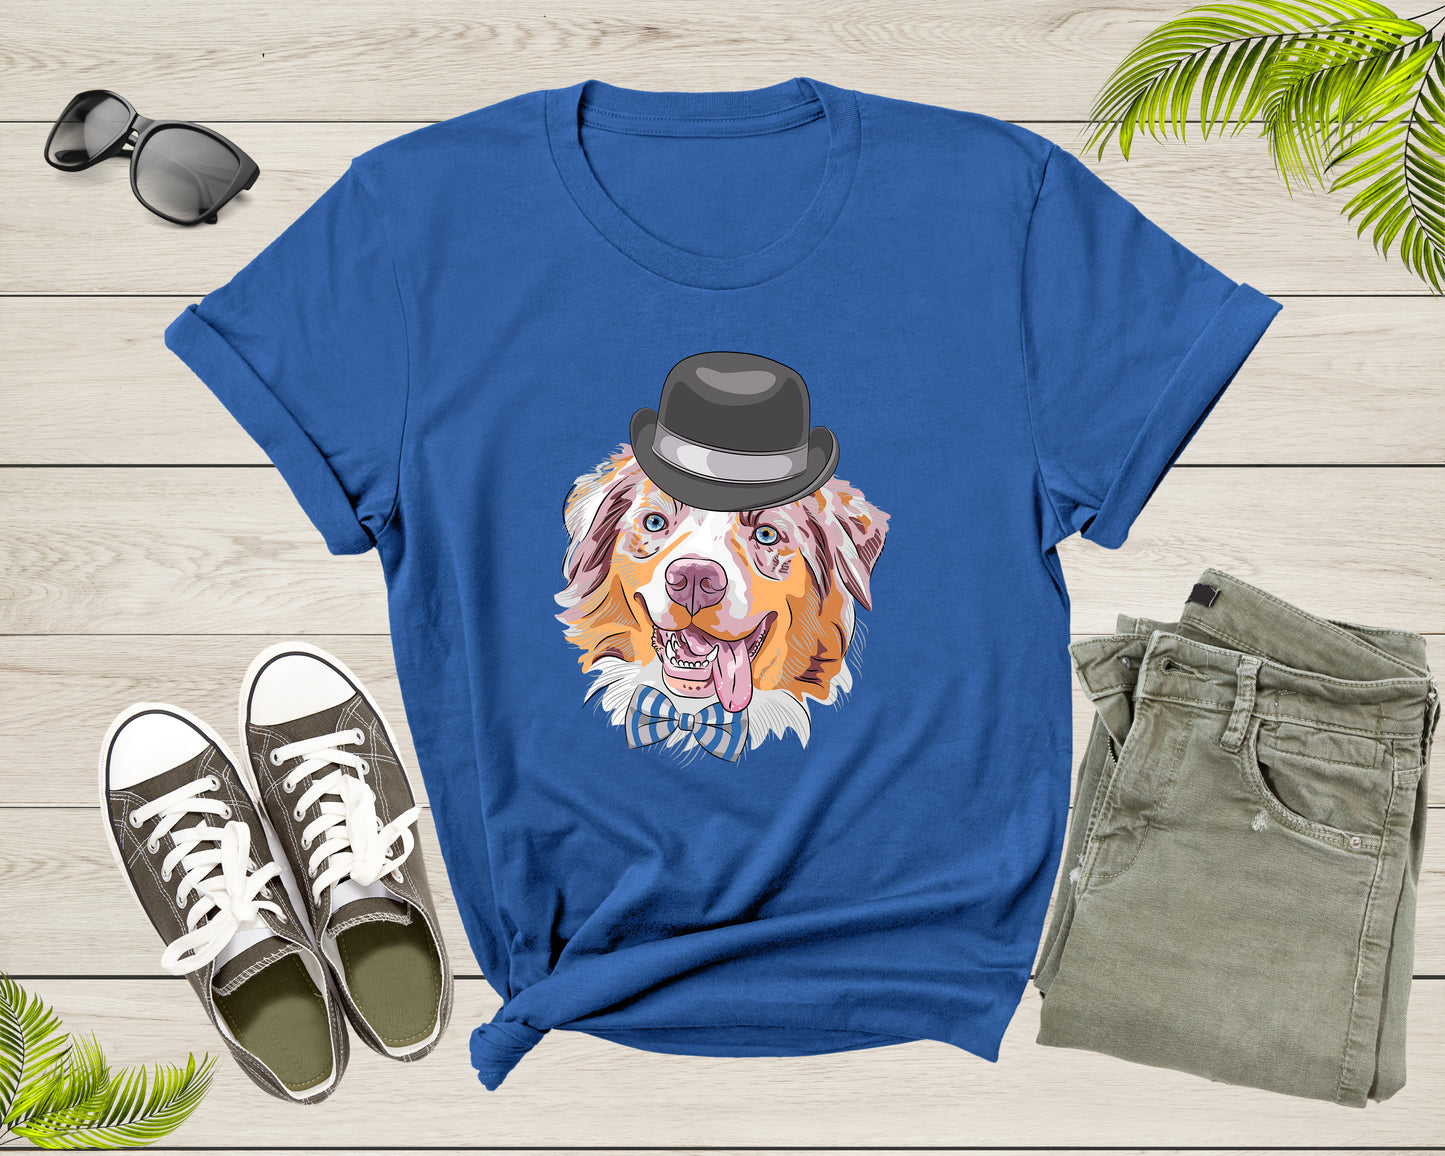 Funny Cute Pet Dog Doggie Puppy Animal Wearing Black Hat T-Shirt Dog Puppy Lover Gift T Shirt for Men Women Kids Boys Girls Graphic Tshirt